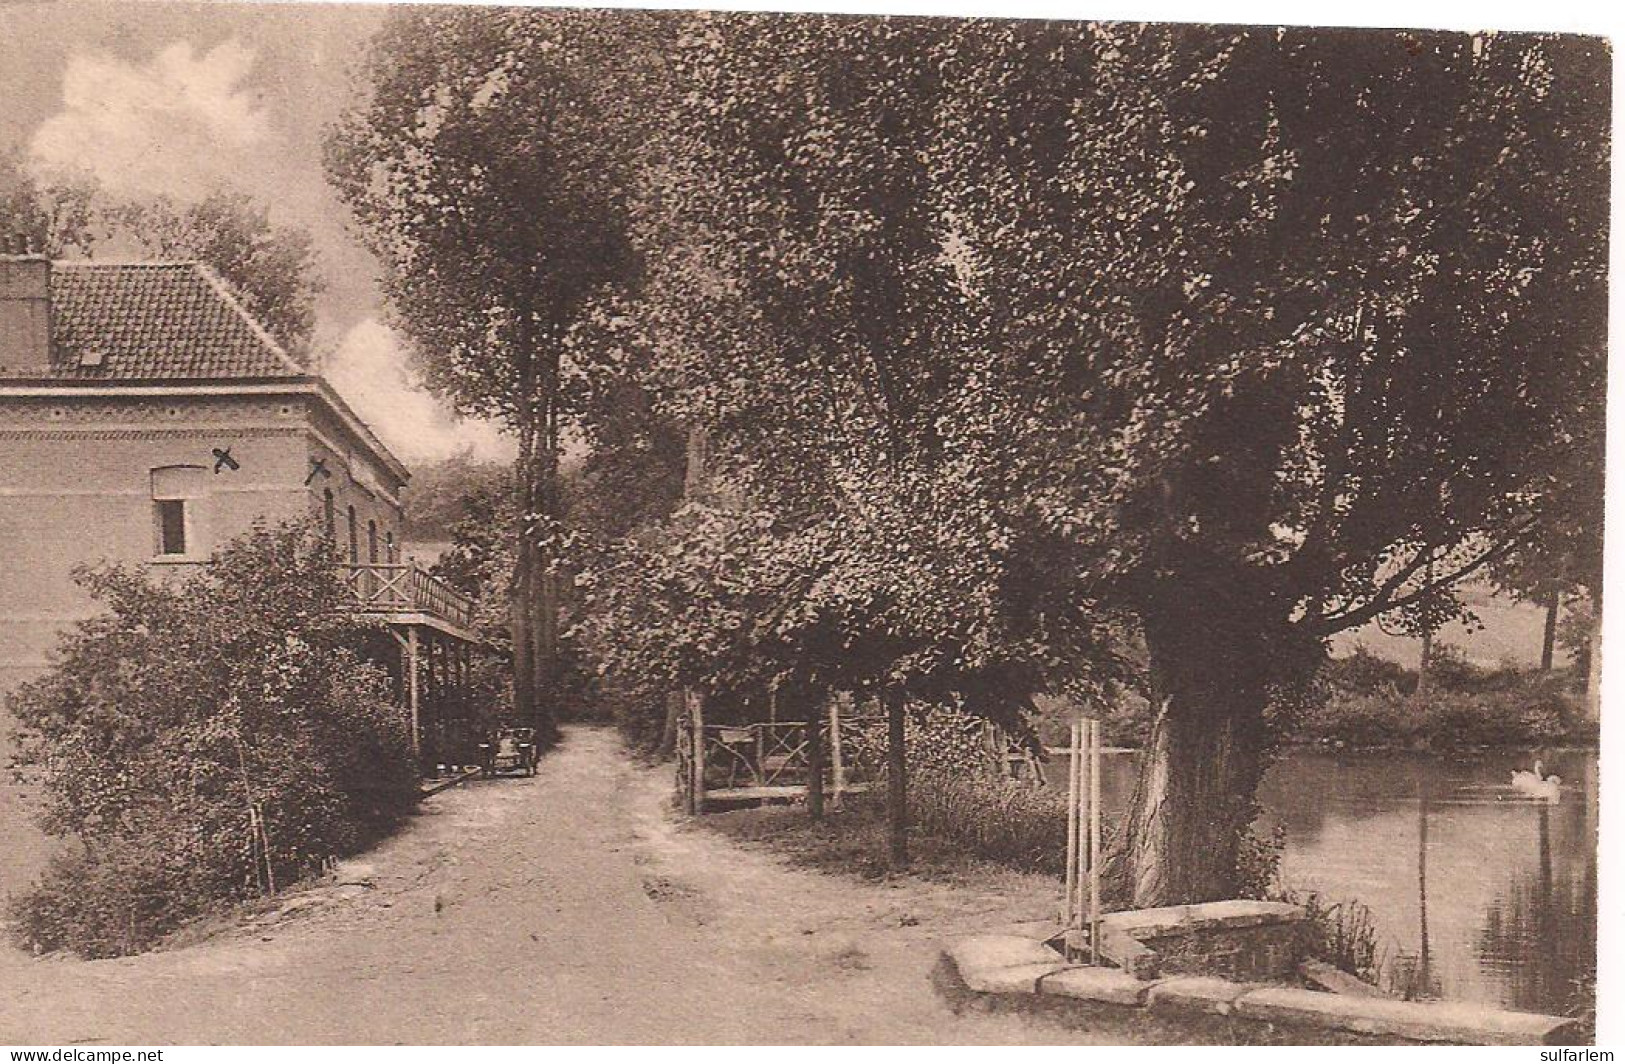 Carte Postale. RHODE St GENESE. Septfontaines. L'Hôtel.1928 - Rhode-St-Genèse - St-Genesius-Rode